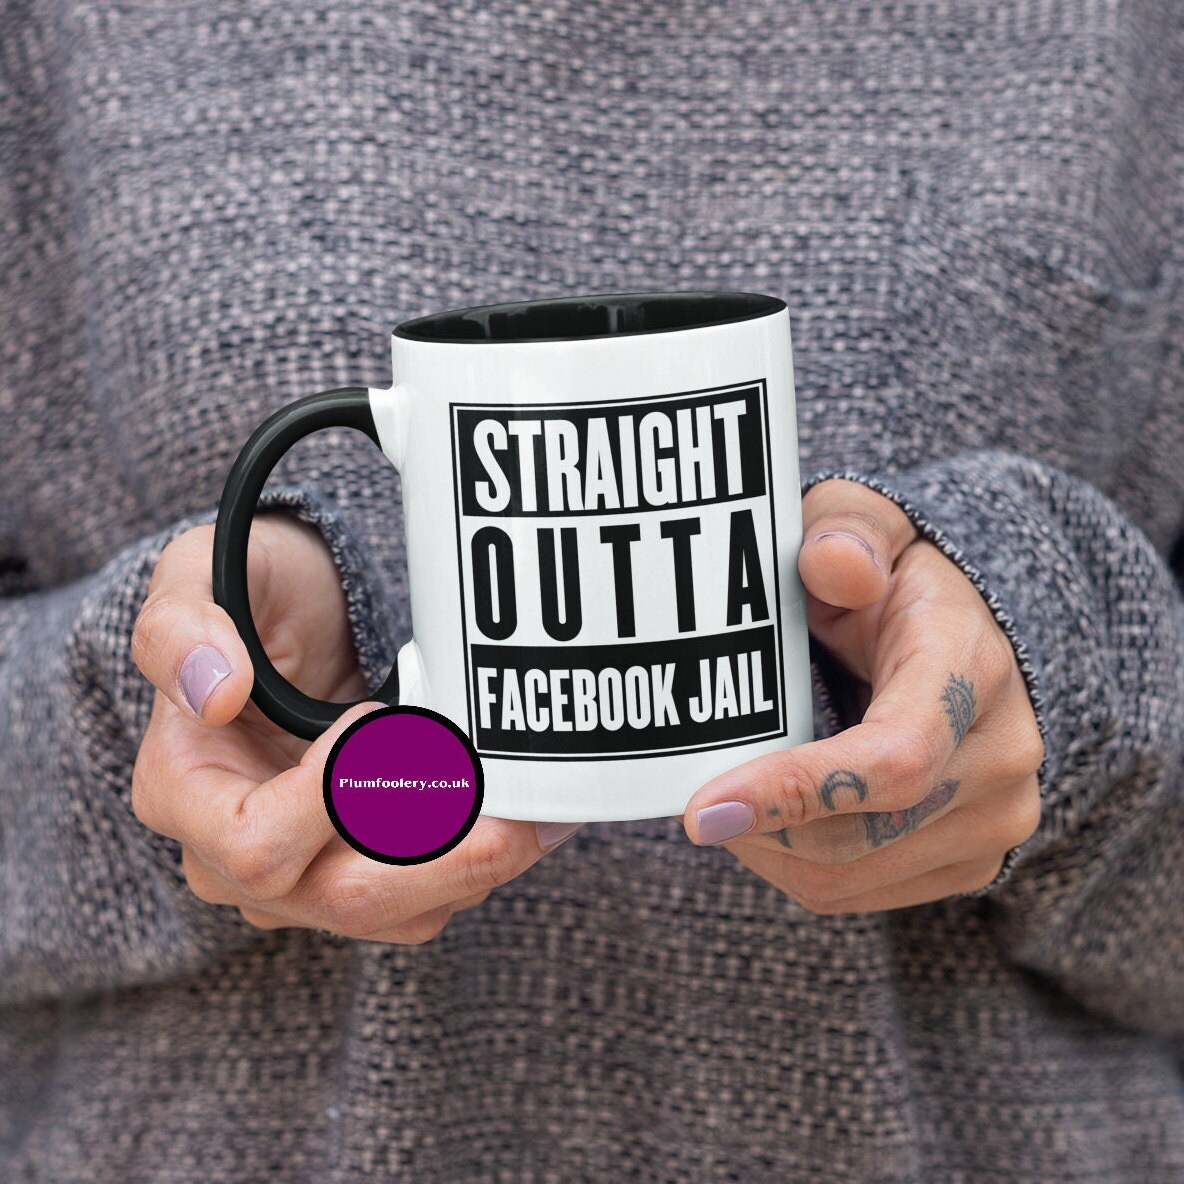 Straight Outta Face-book Jail  Coffee Mug Novelty Tea Cup Ceramic Coffee Mug